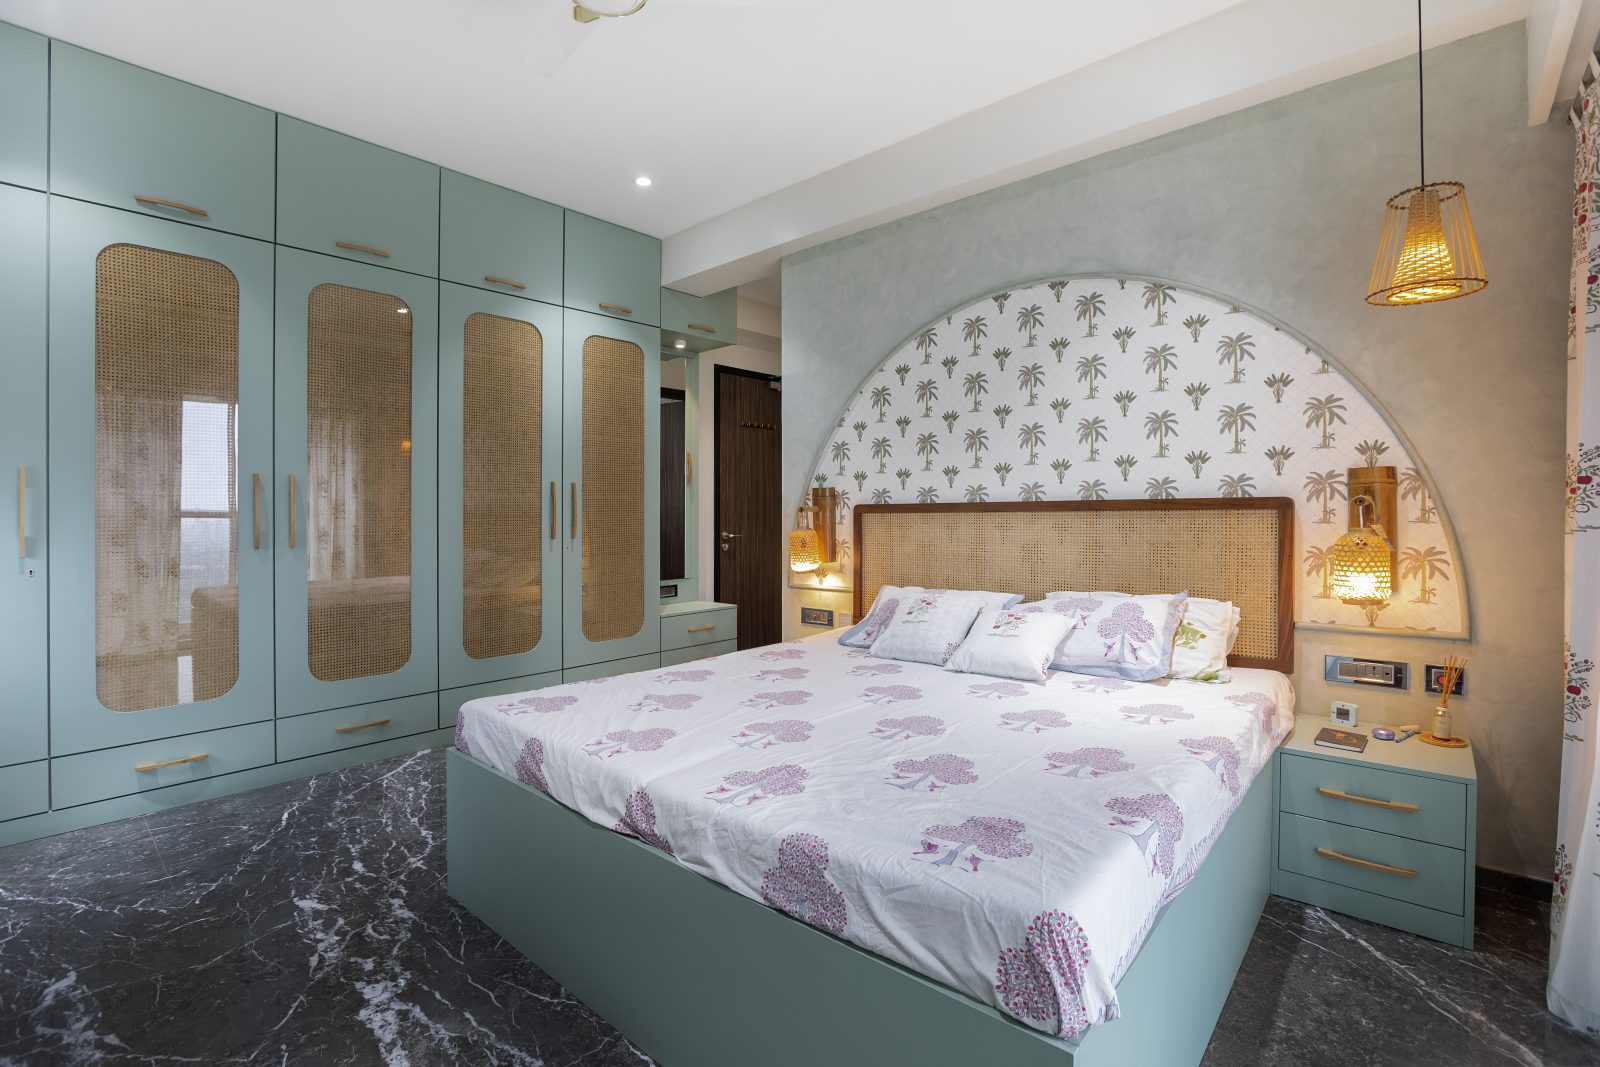 Bed Designs by Rennovate | bed design for bedroom